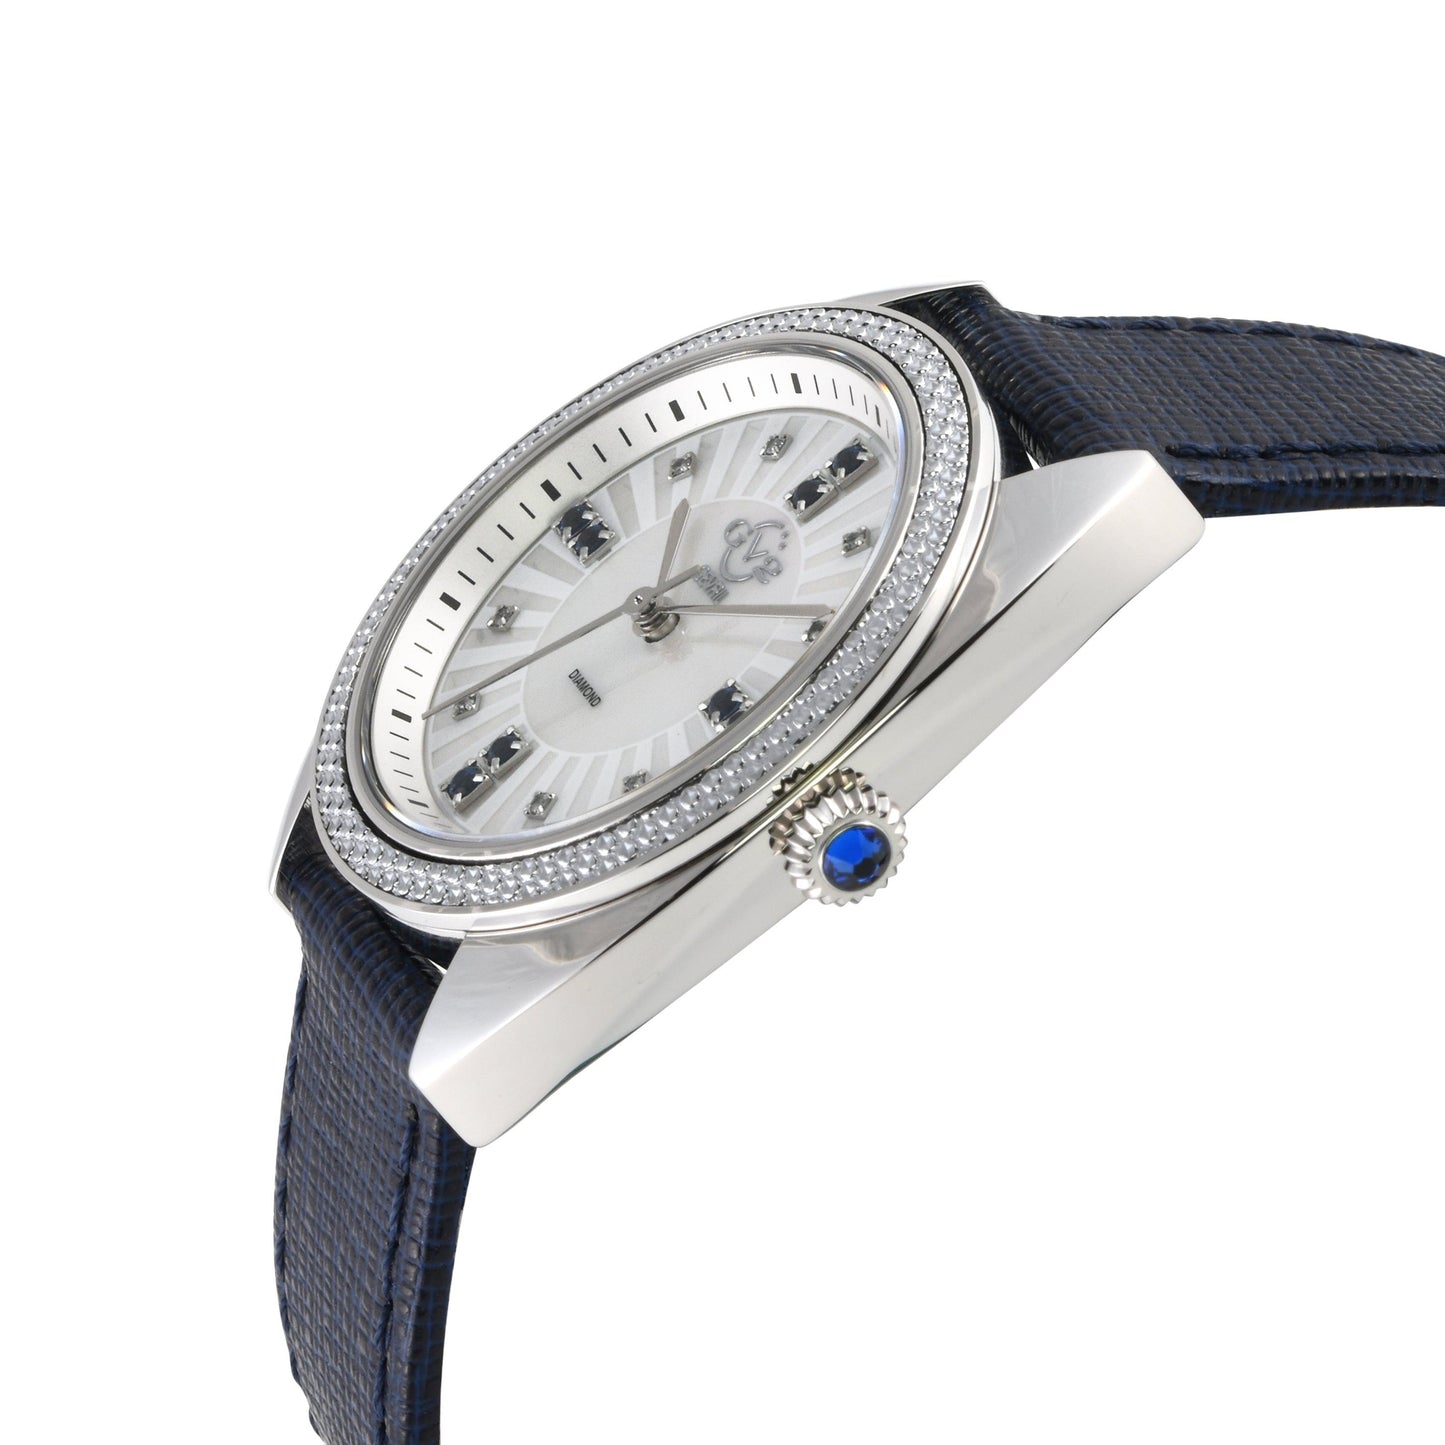 Gevril-Luxury-Swiss-Watches-GV2 Palermo Diamond Gemstone-13101